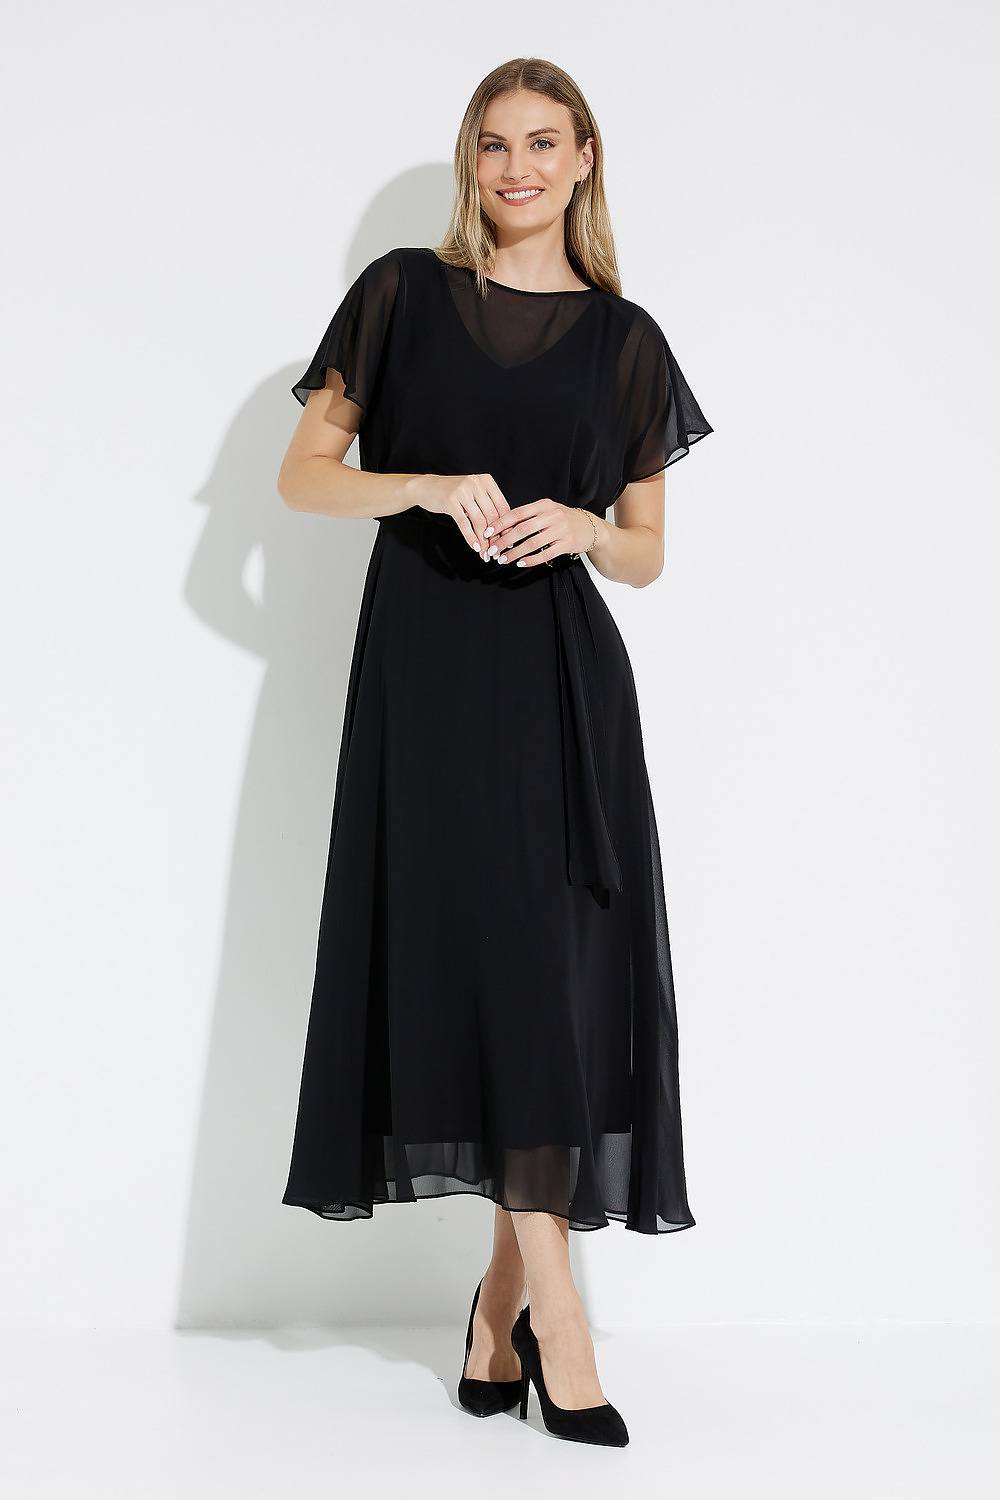 Joseph Ribkoff Floor-Length Dress Style 223734. Black